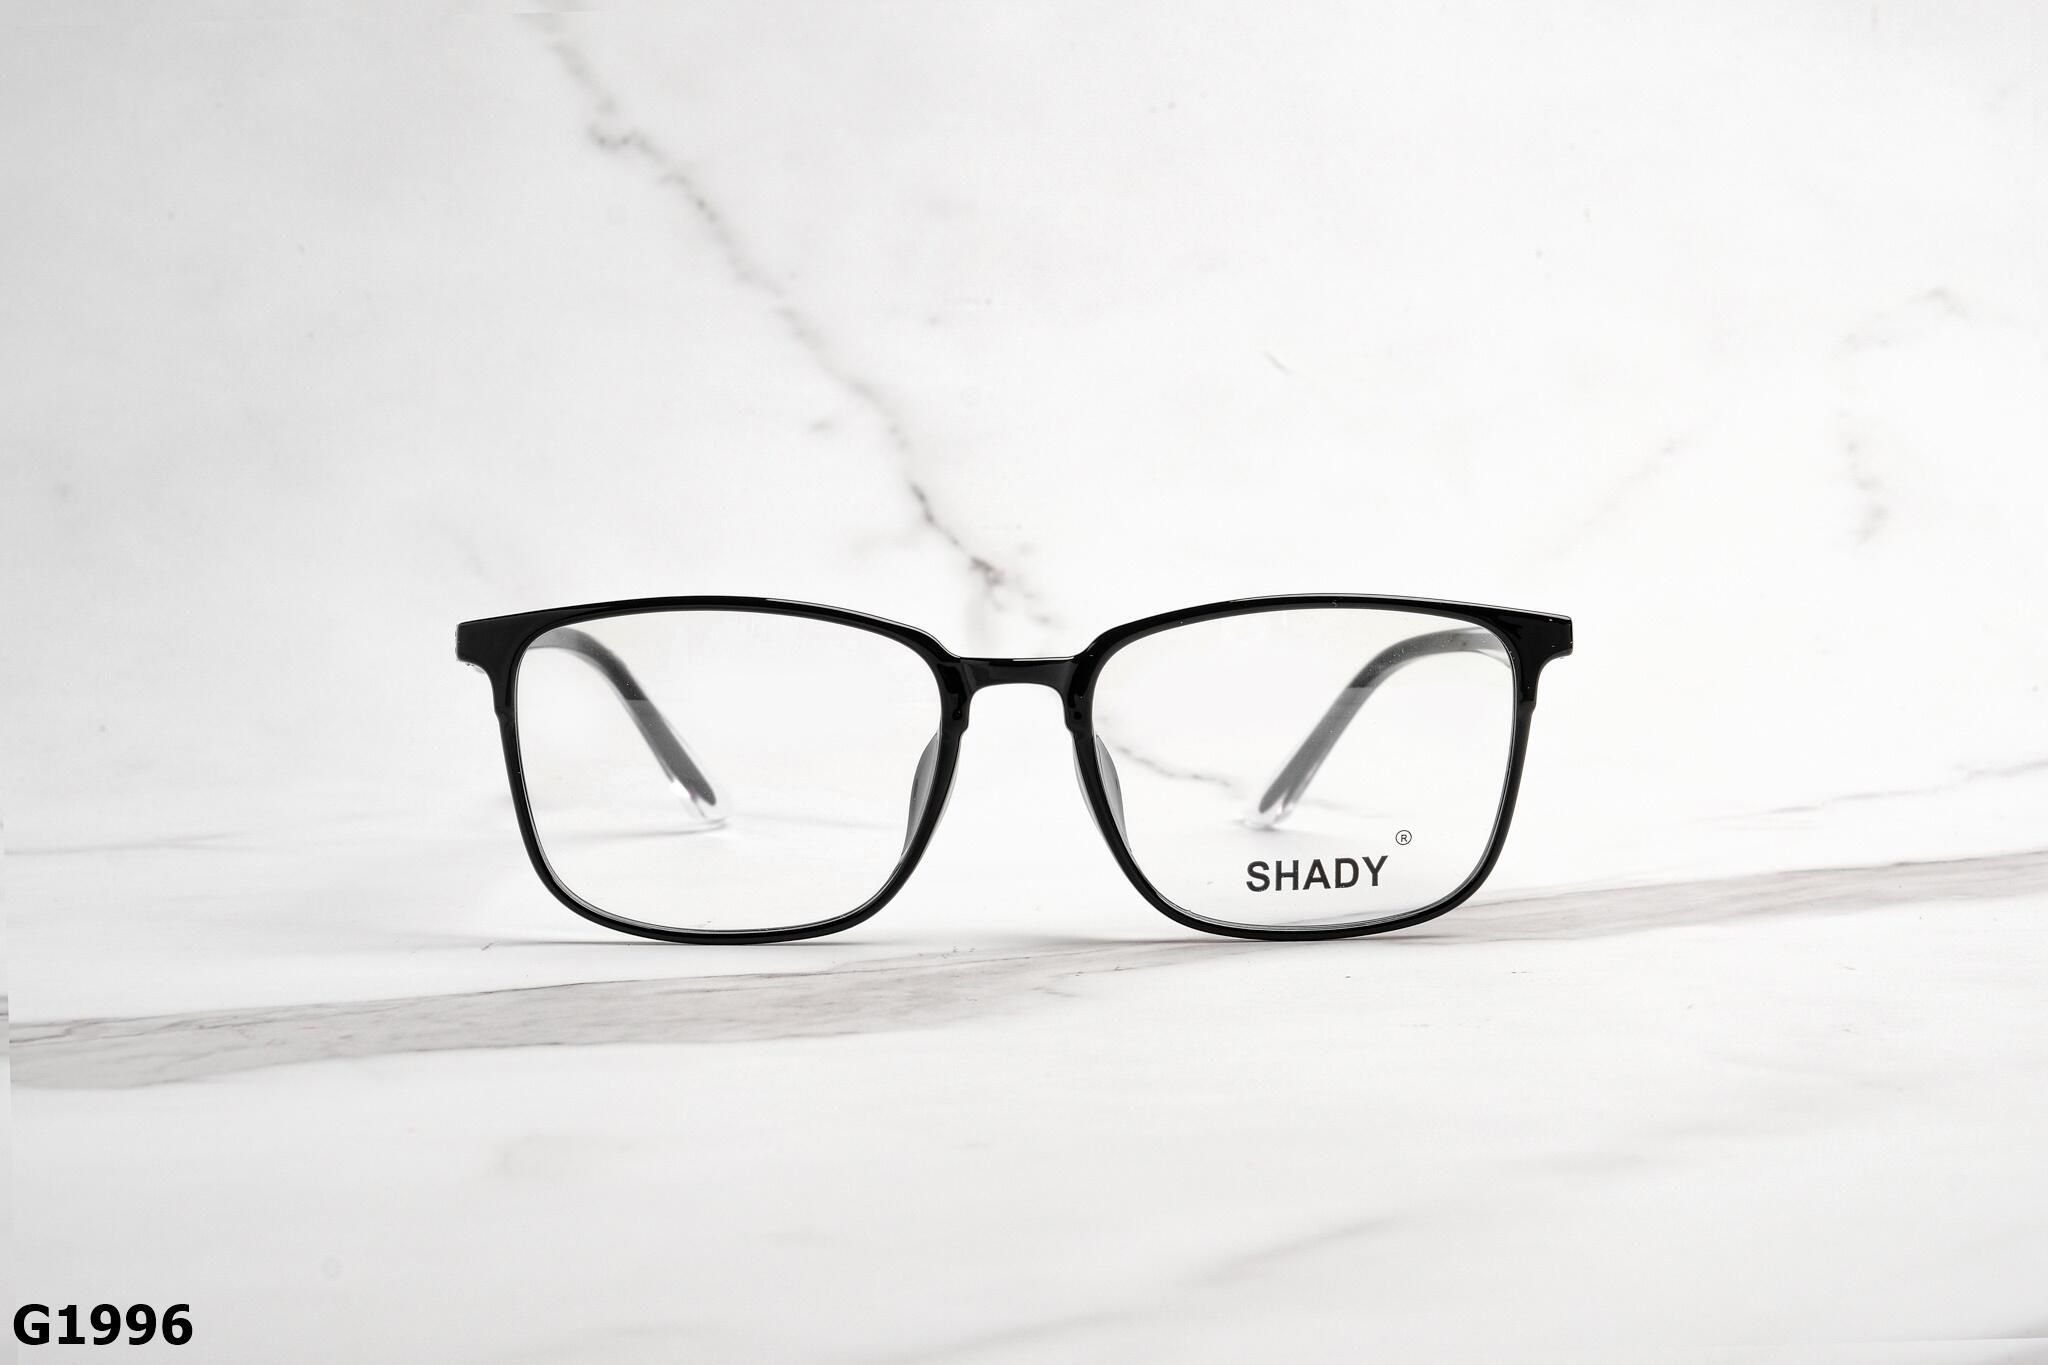  SHADY Eyewear - Glasses - G1996 